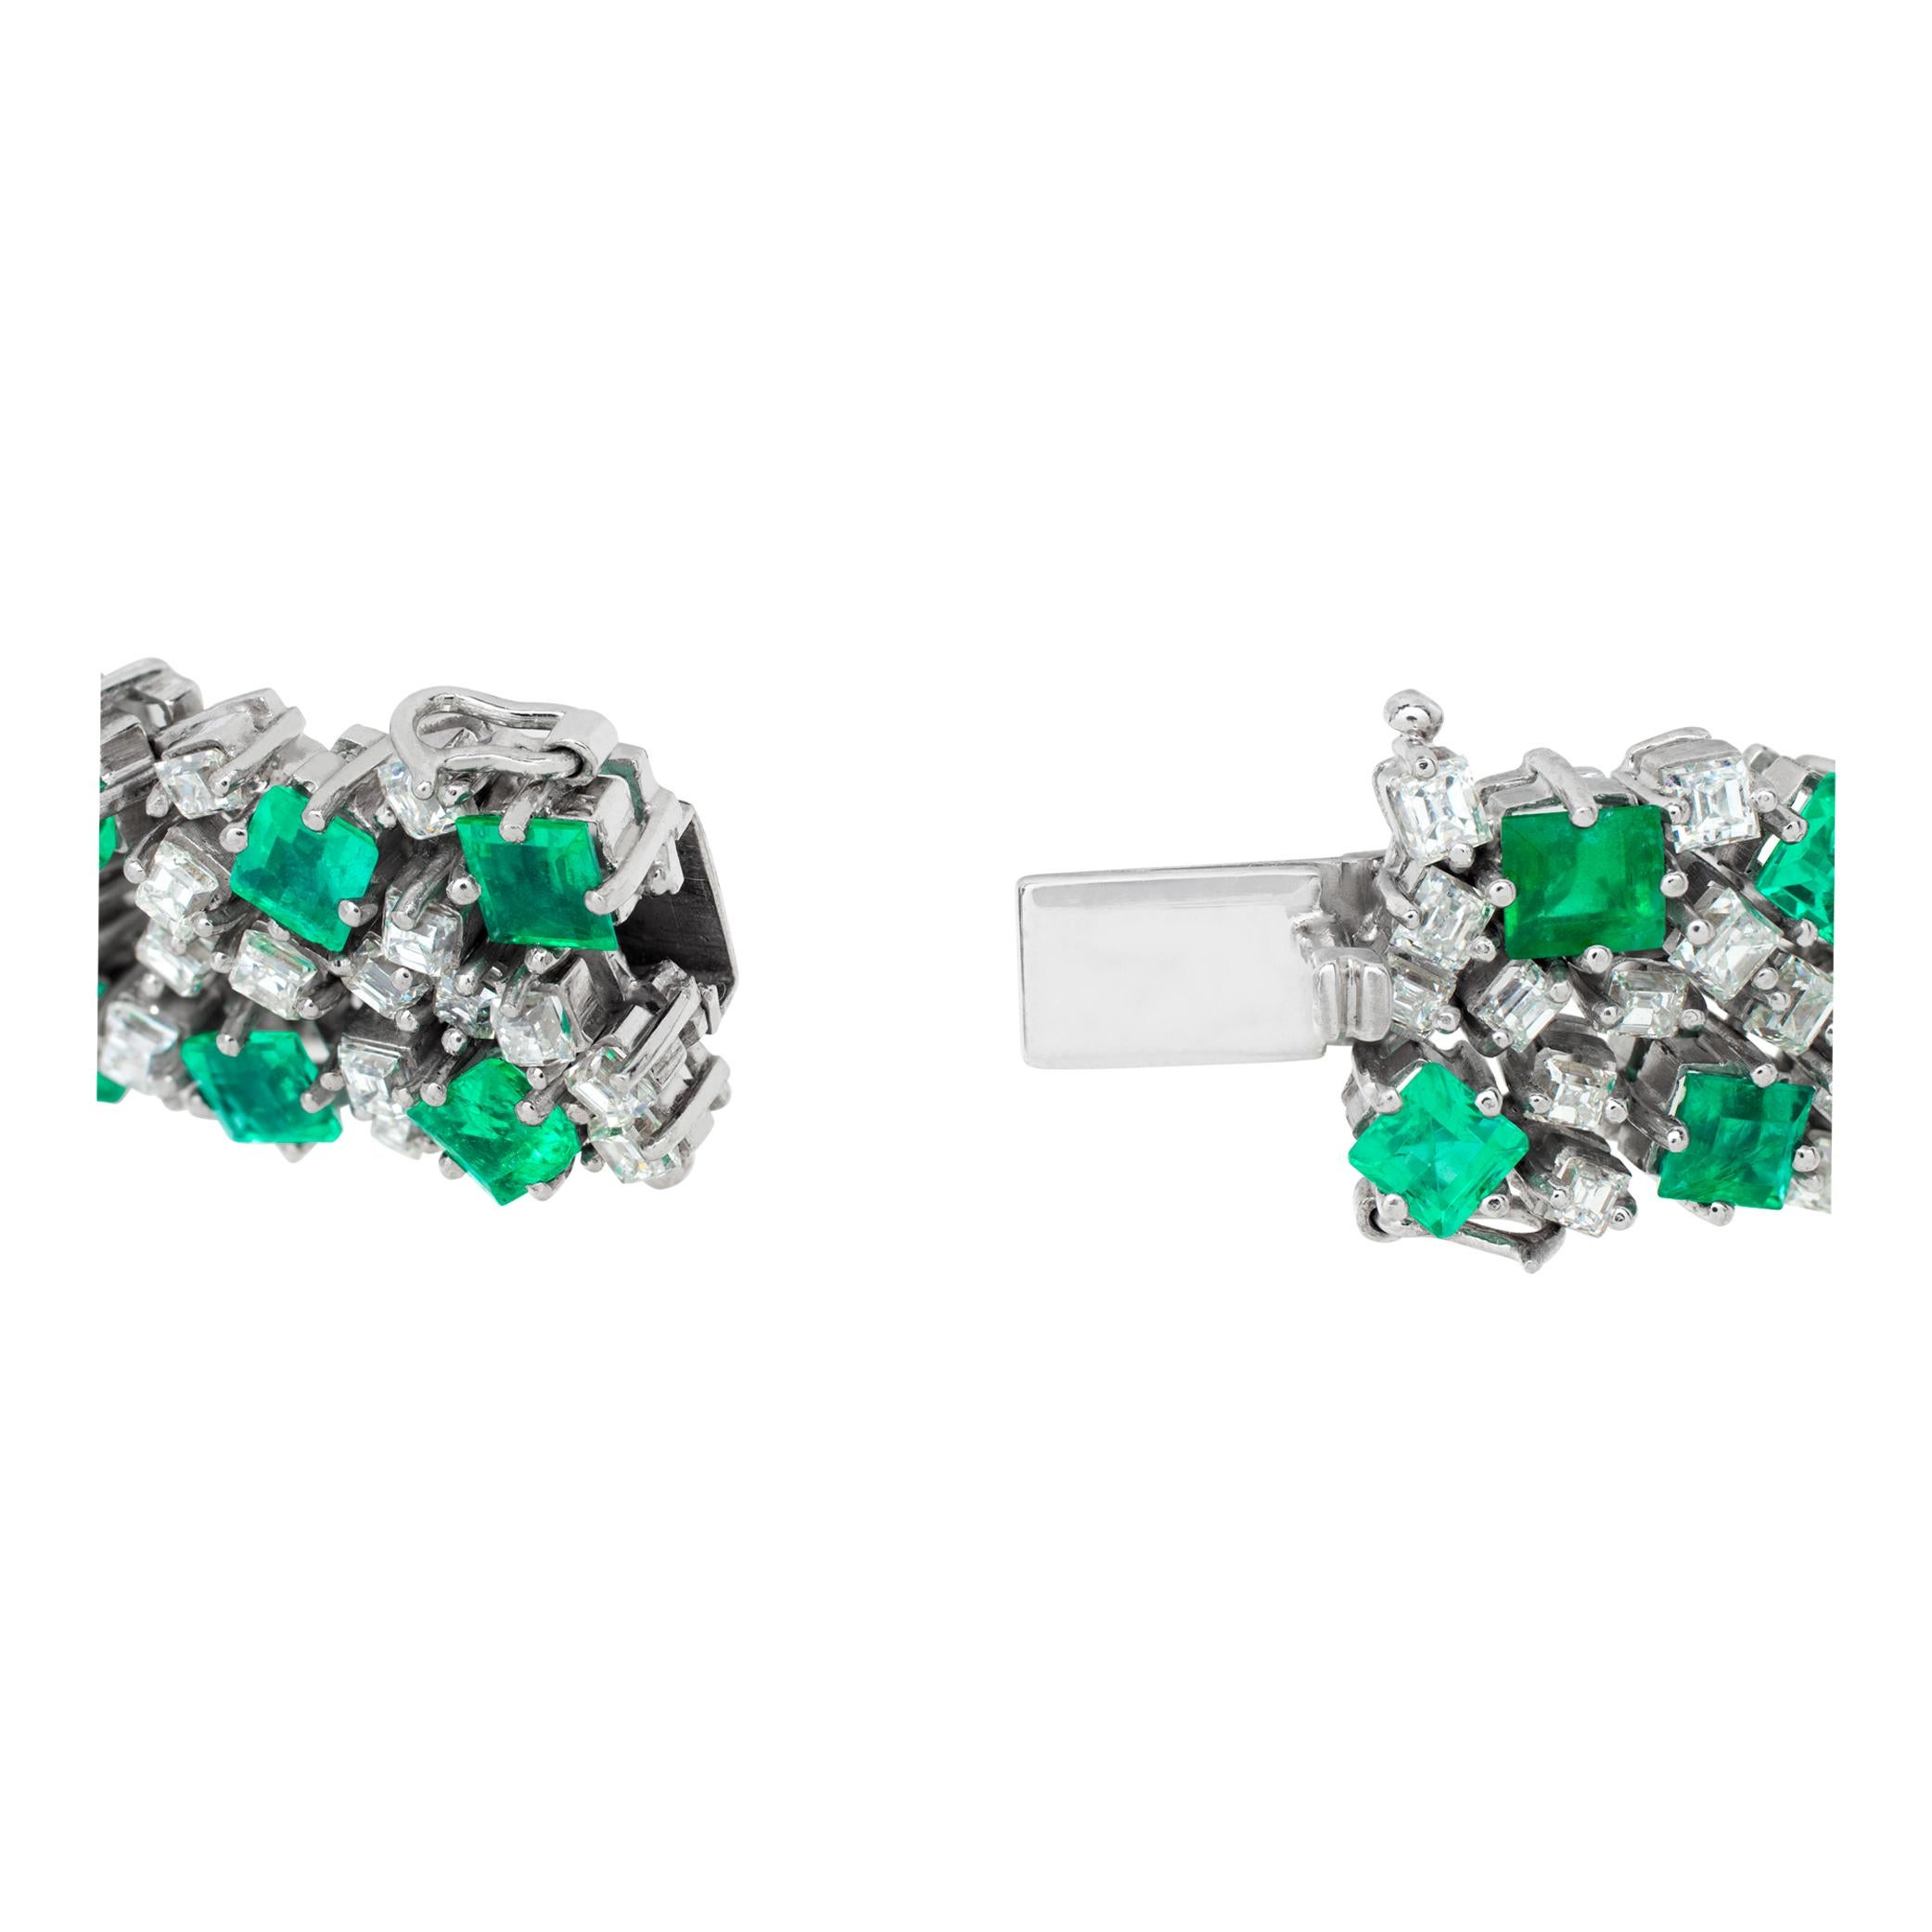 Women's Platinum diamond and emerald bracelet with Columbian emeralds